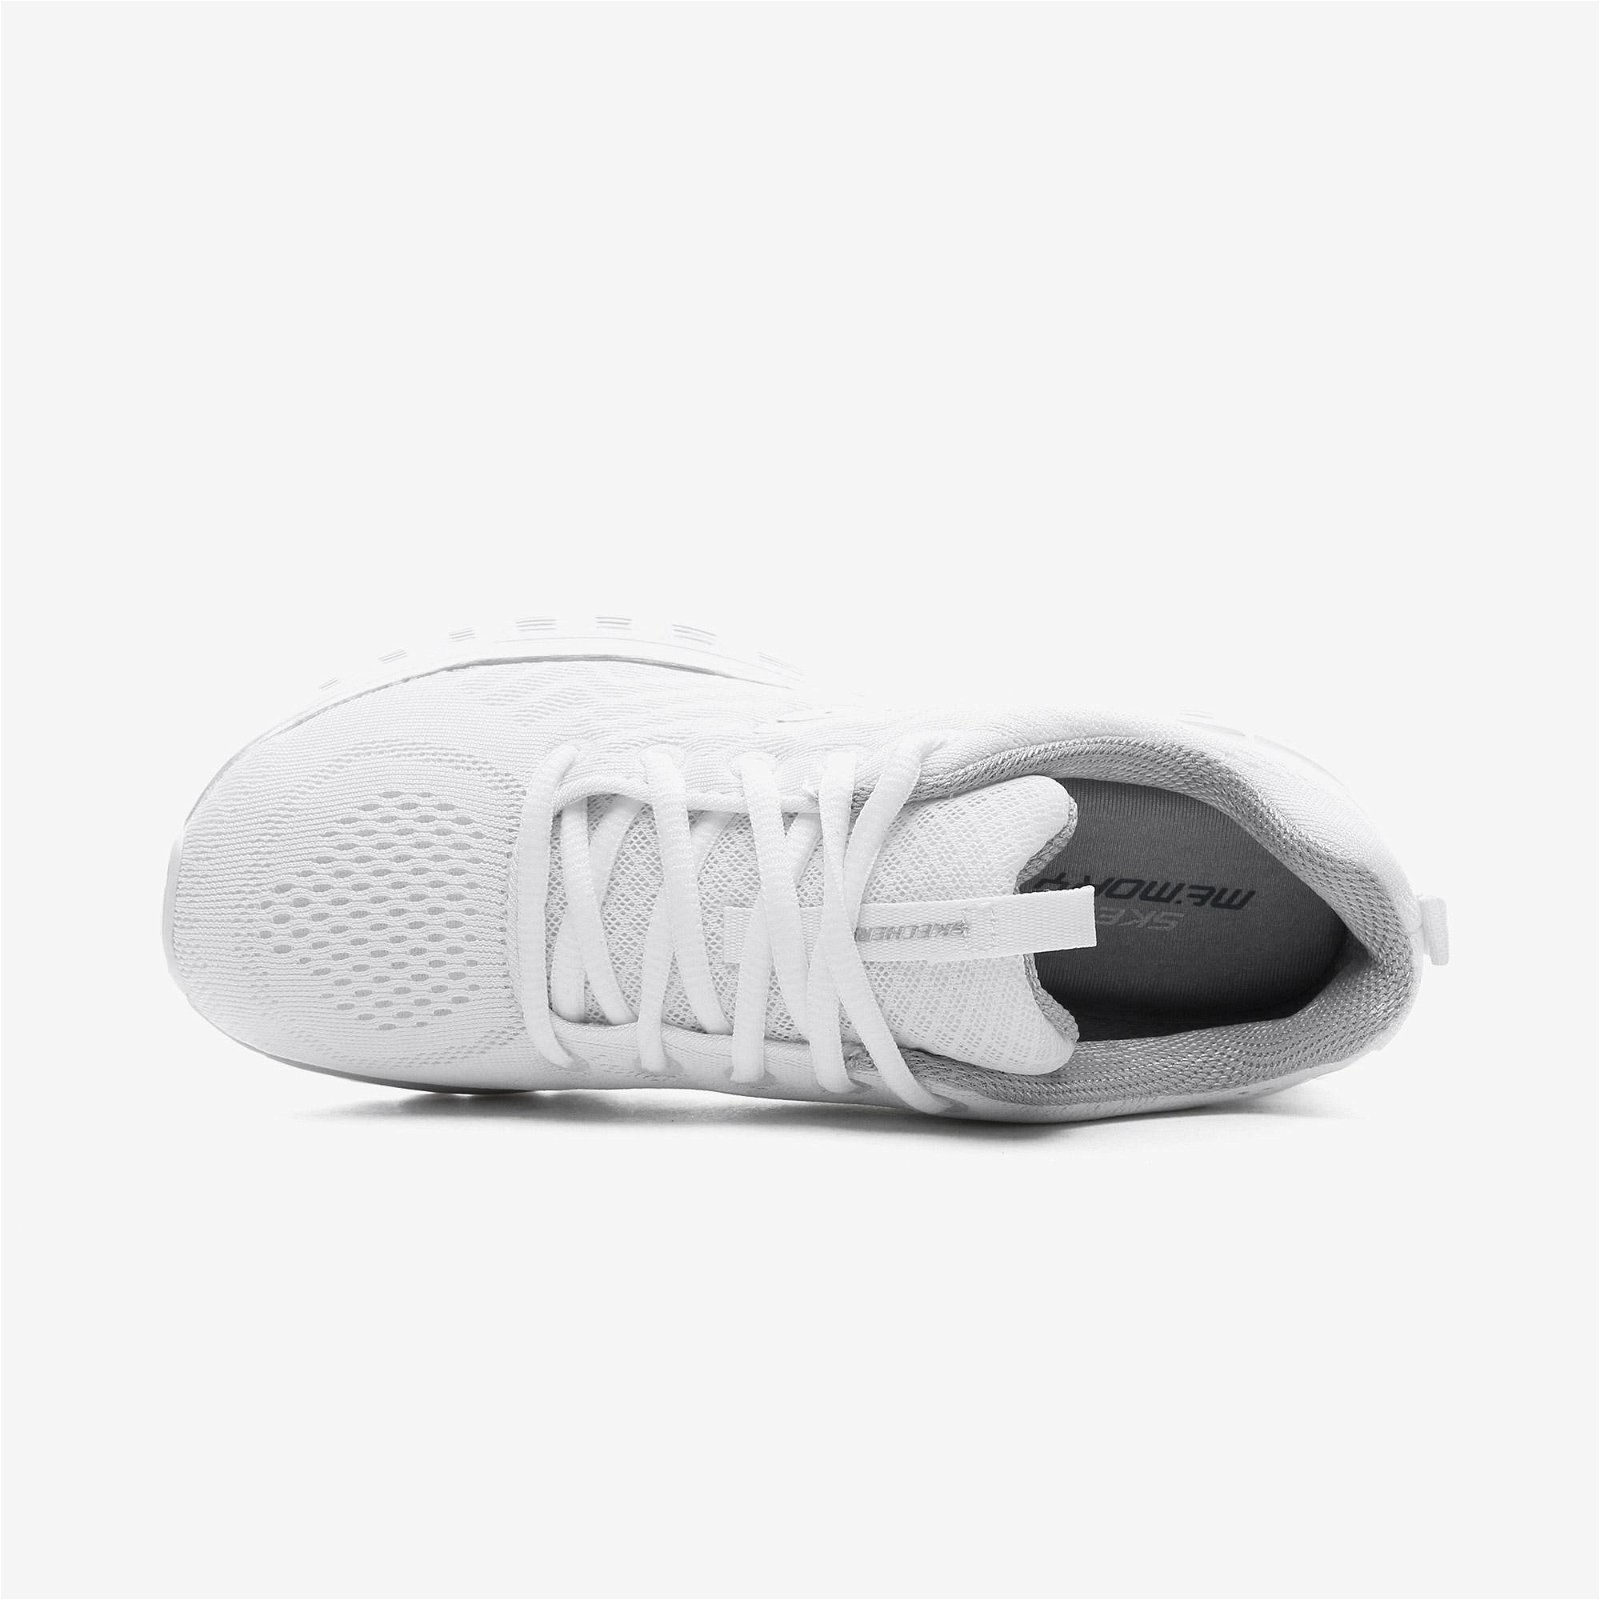 Skechers Graceful-Get Connected Beyaz Spor Ayakkabı